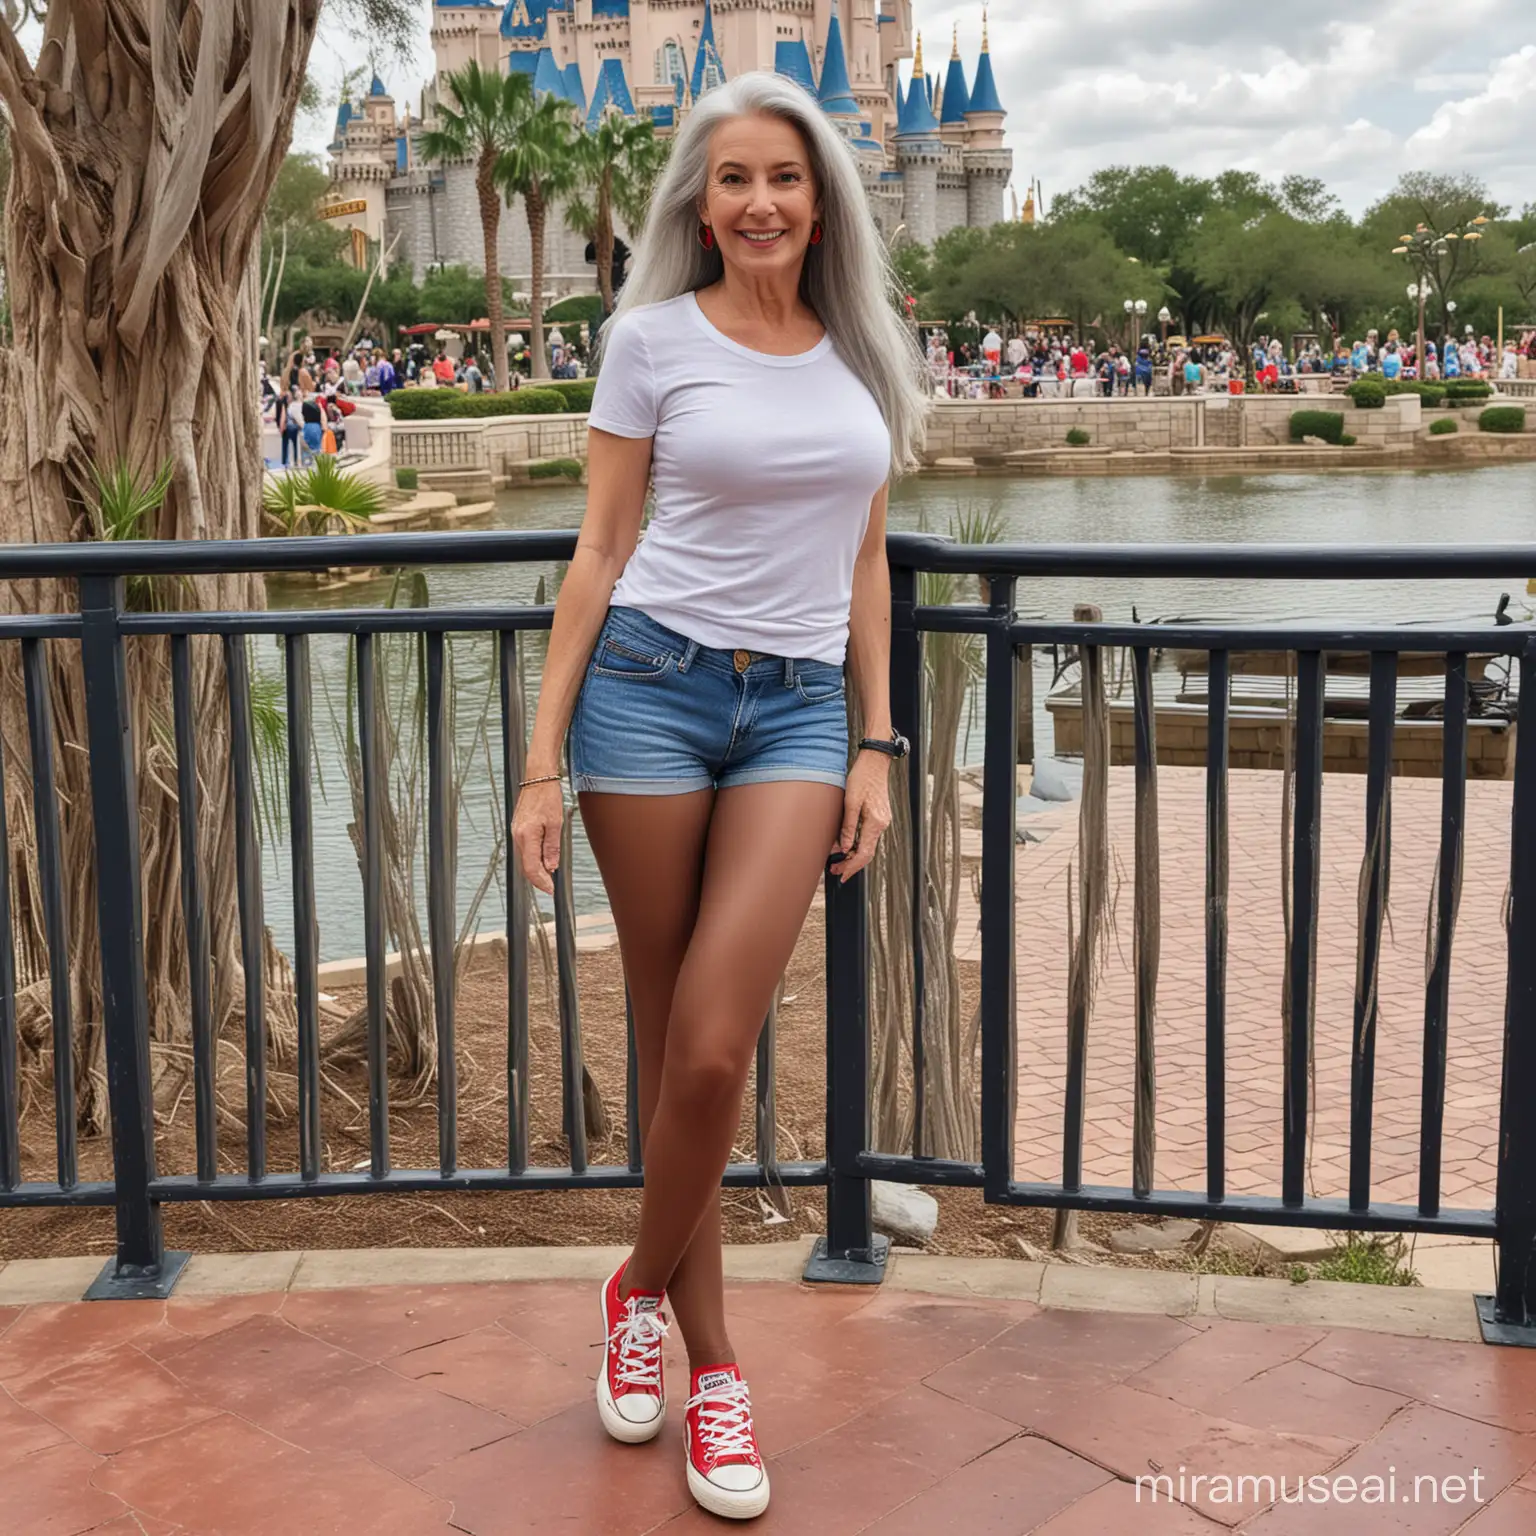 Stylish Mature Woman Enjoying Disney World in Red Converse Sneakers